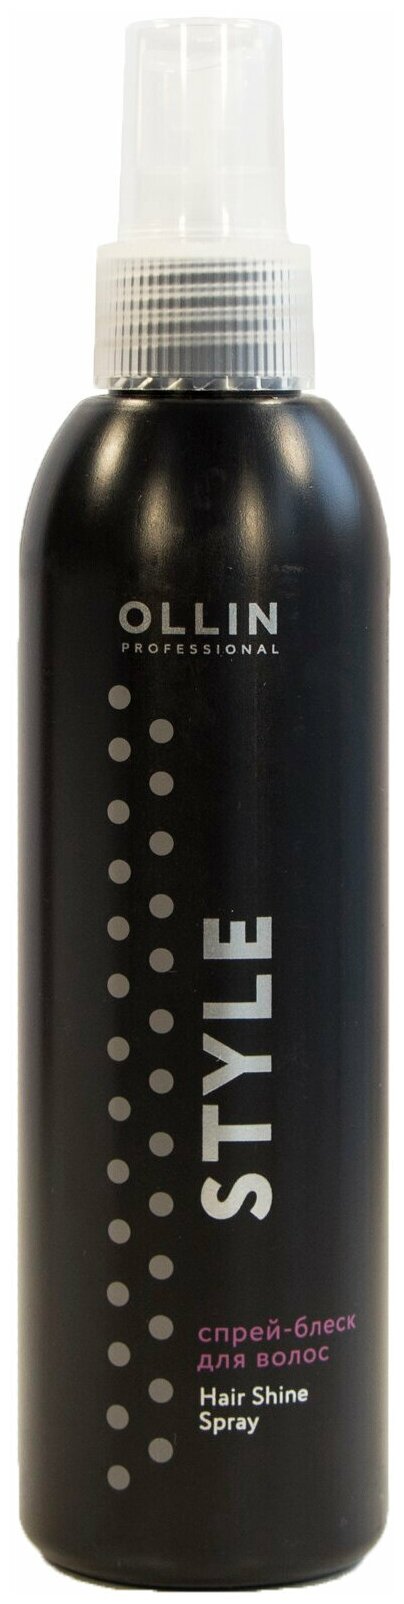 OLLIN Professional Спрей-блеск для волос, 200 г, 200 мл